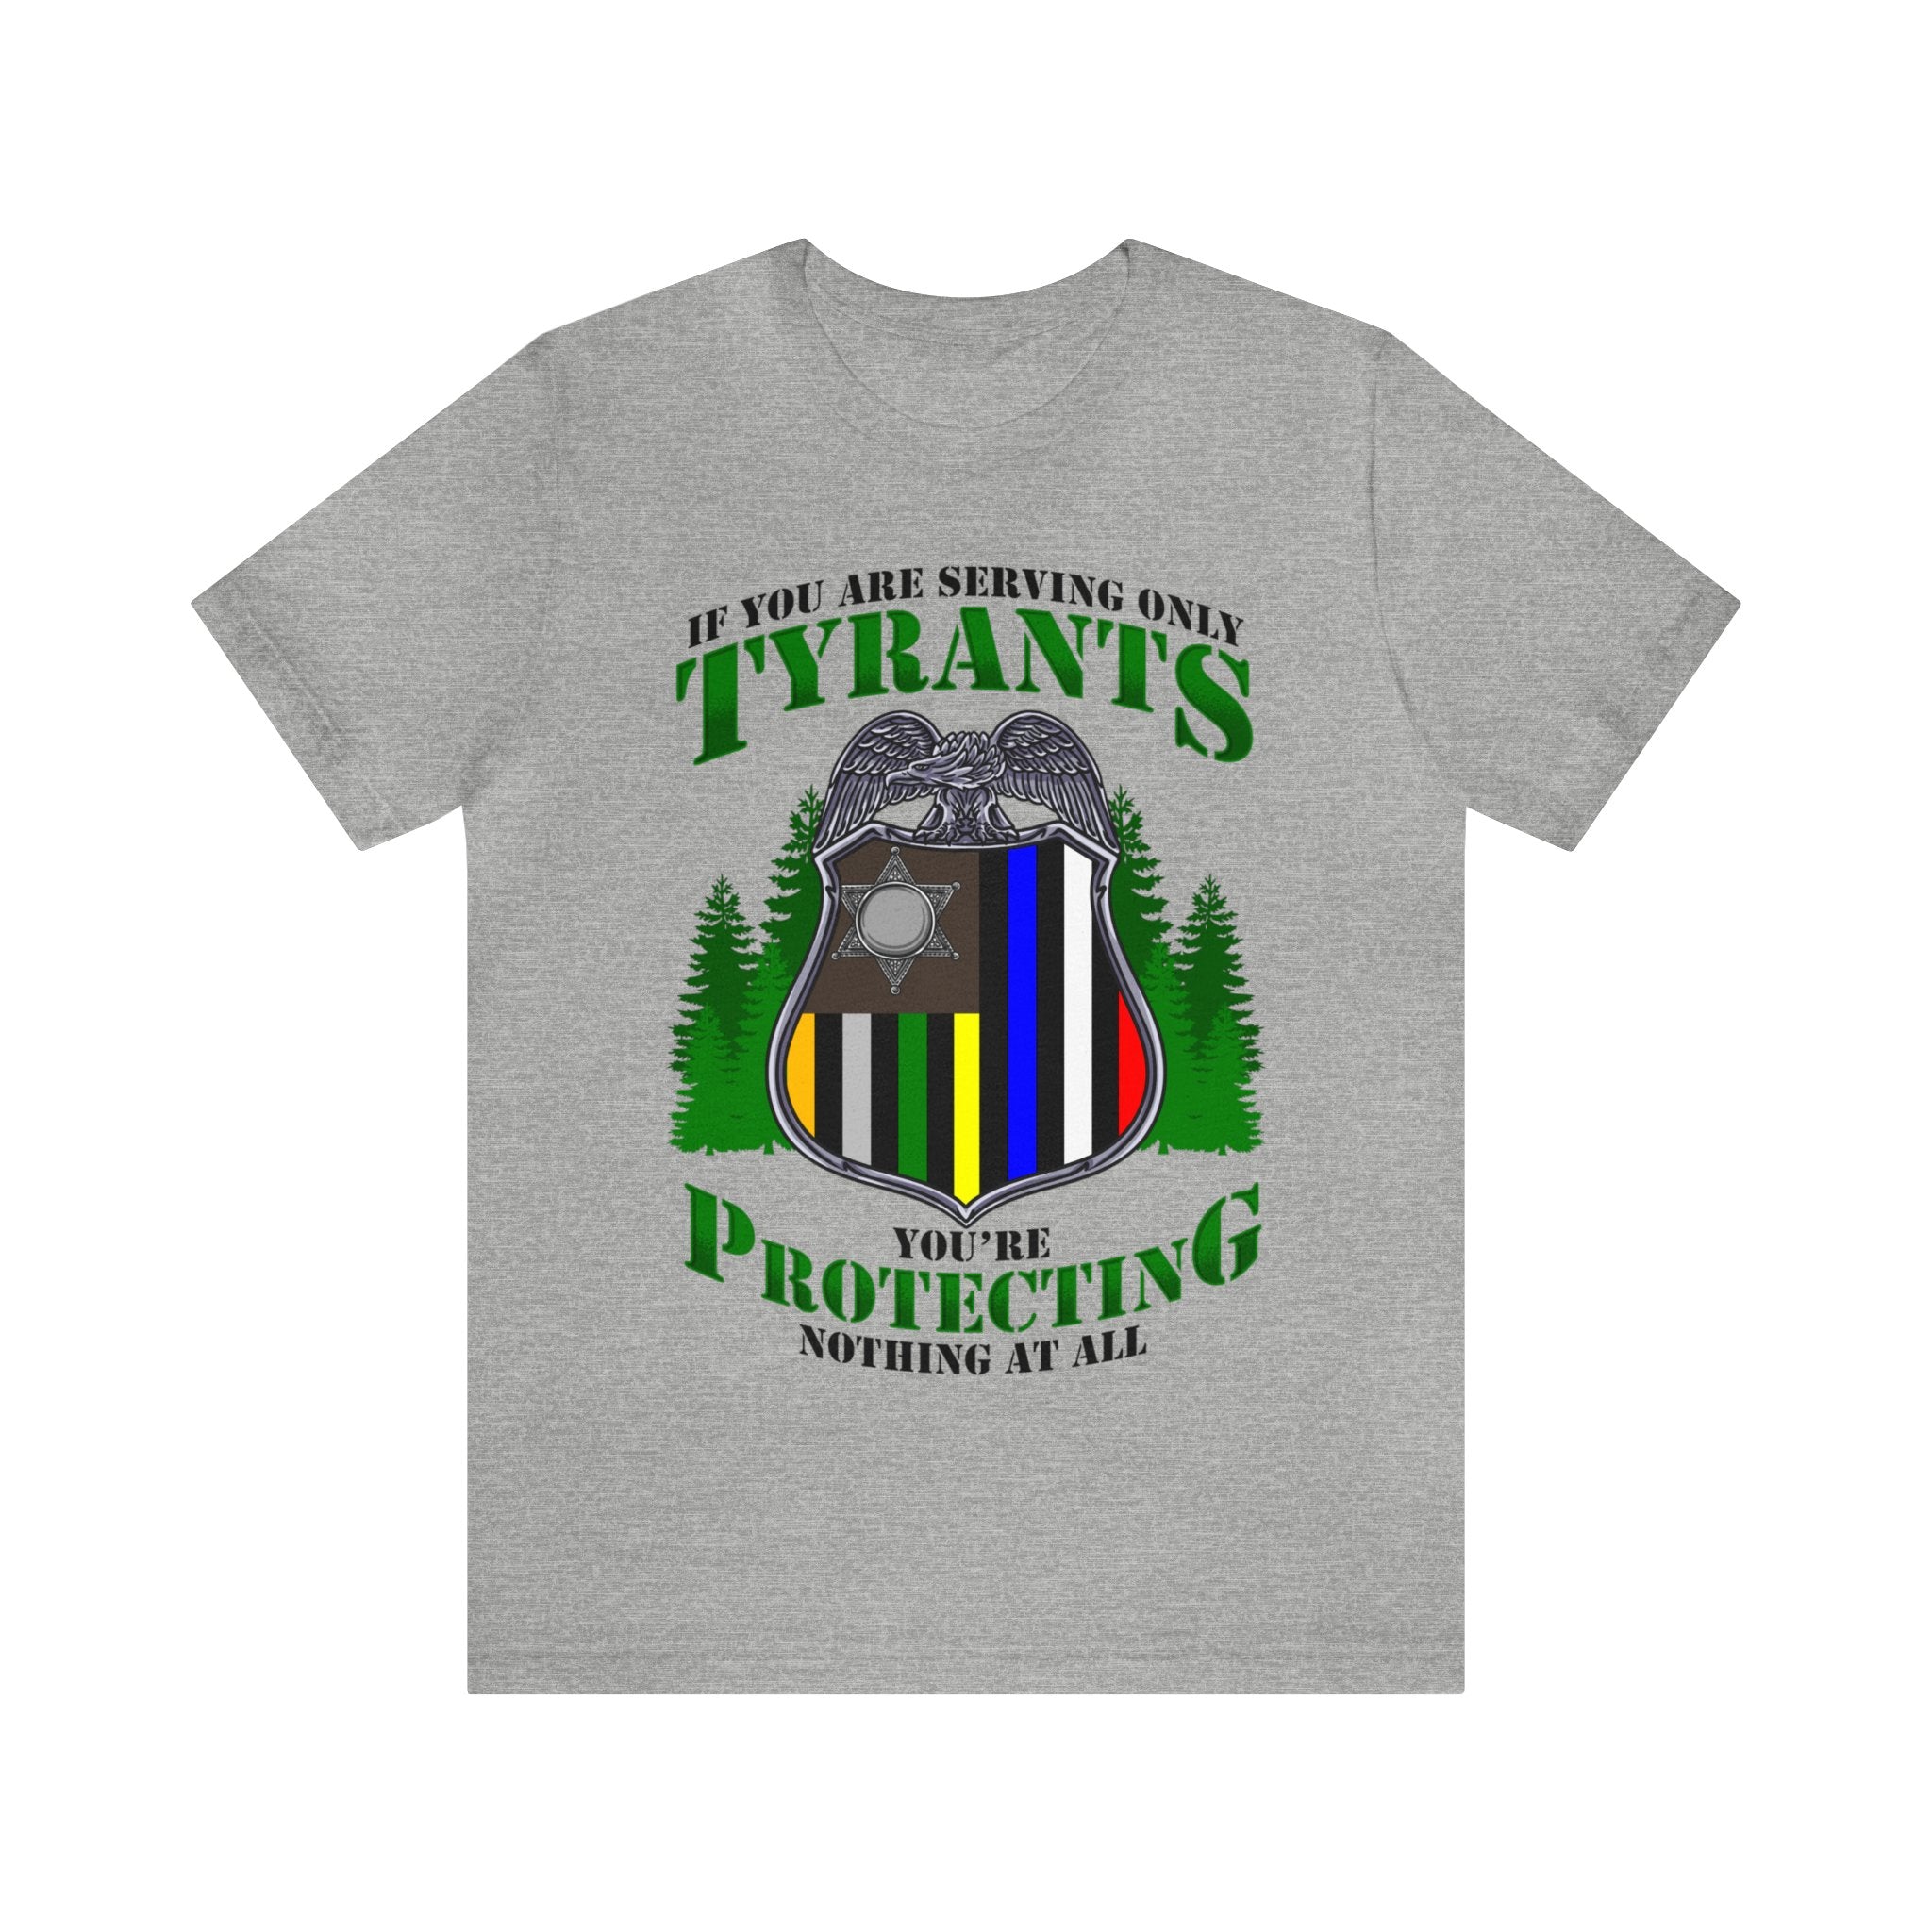 Thin Federal Line Tee - Tyrants/Protecting